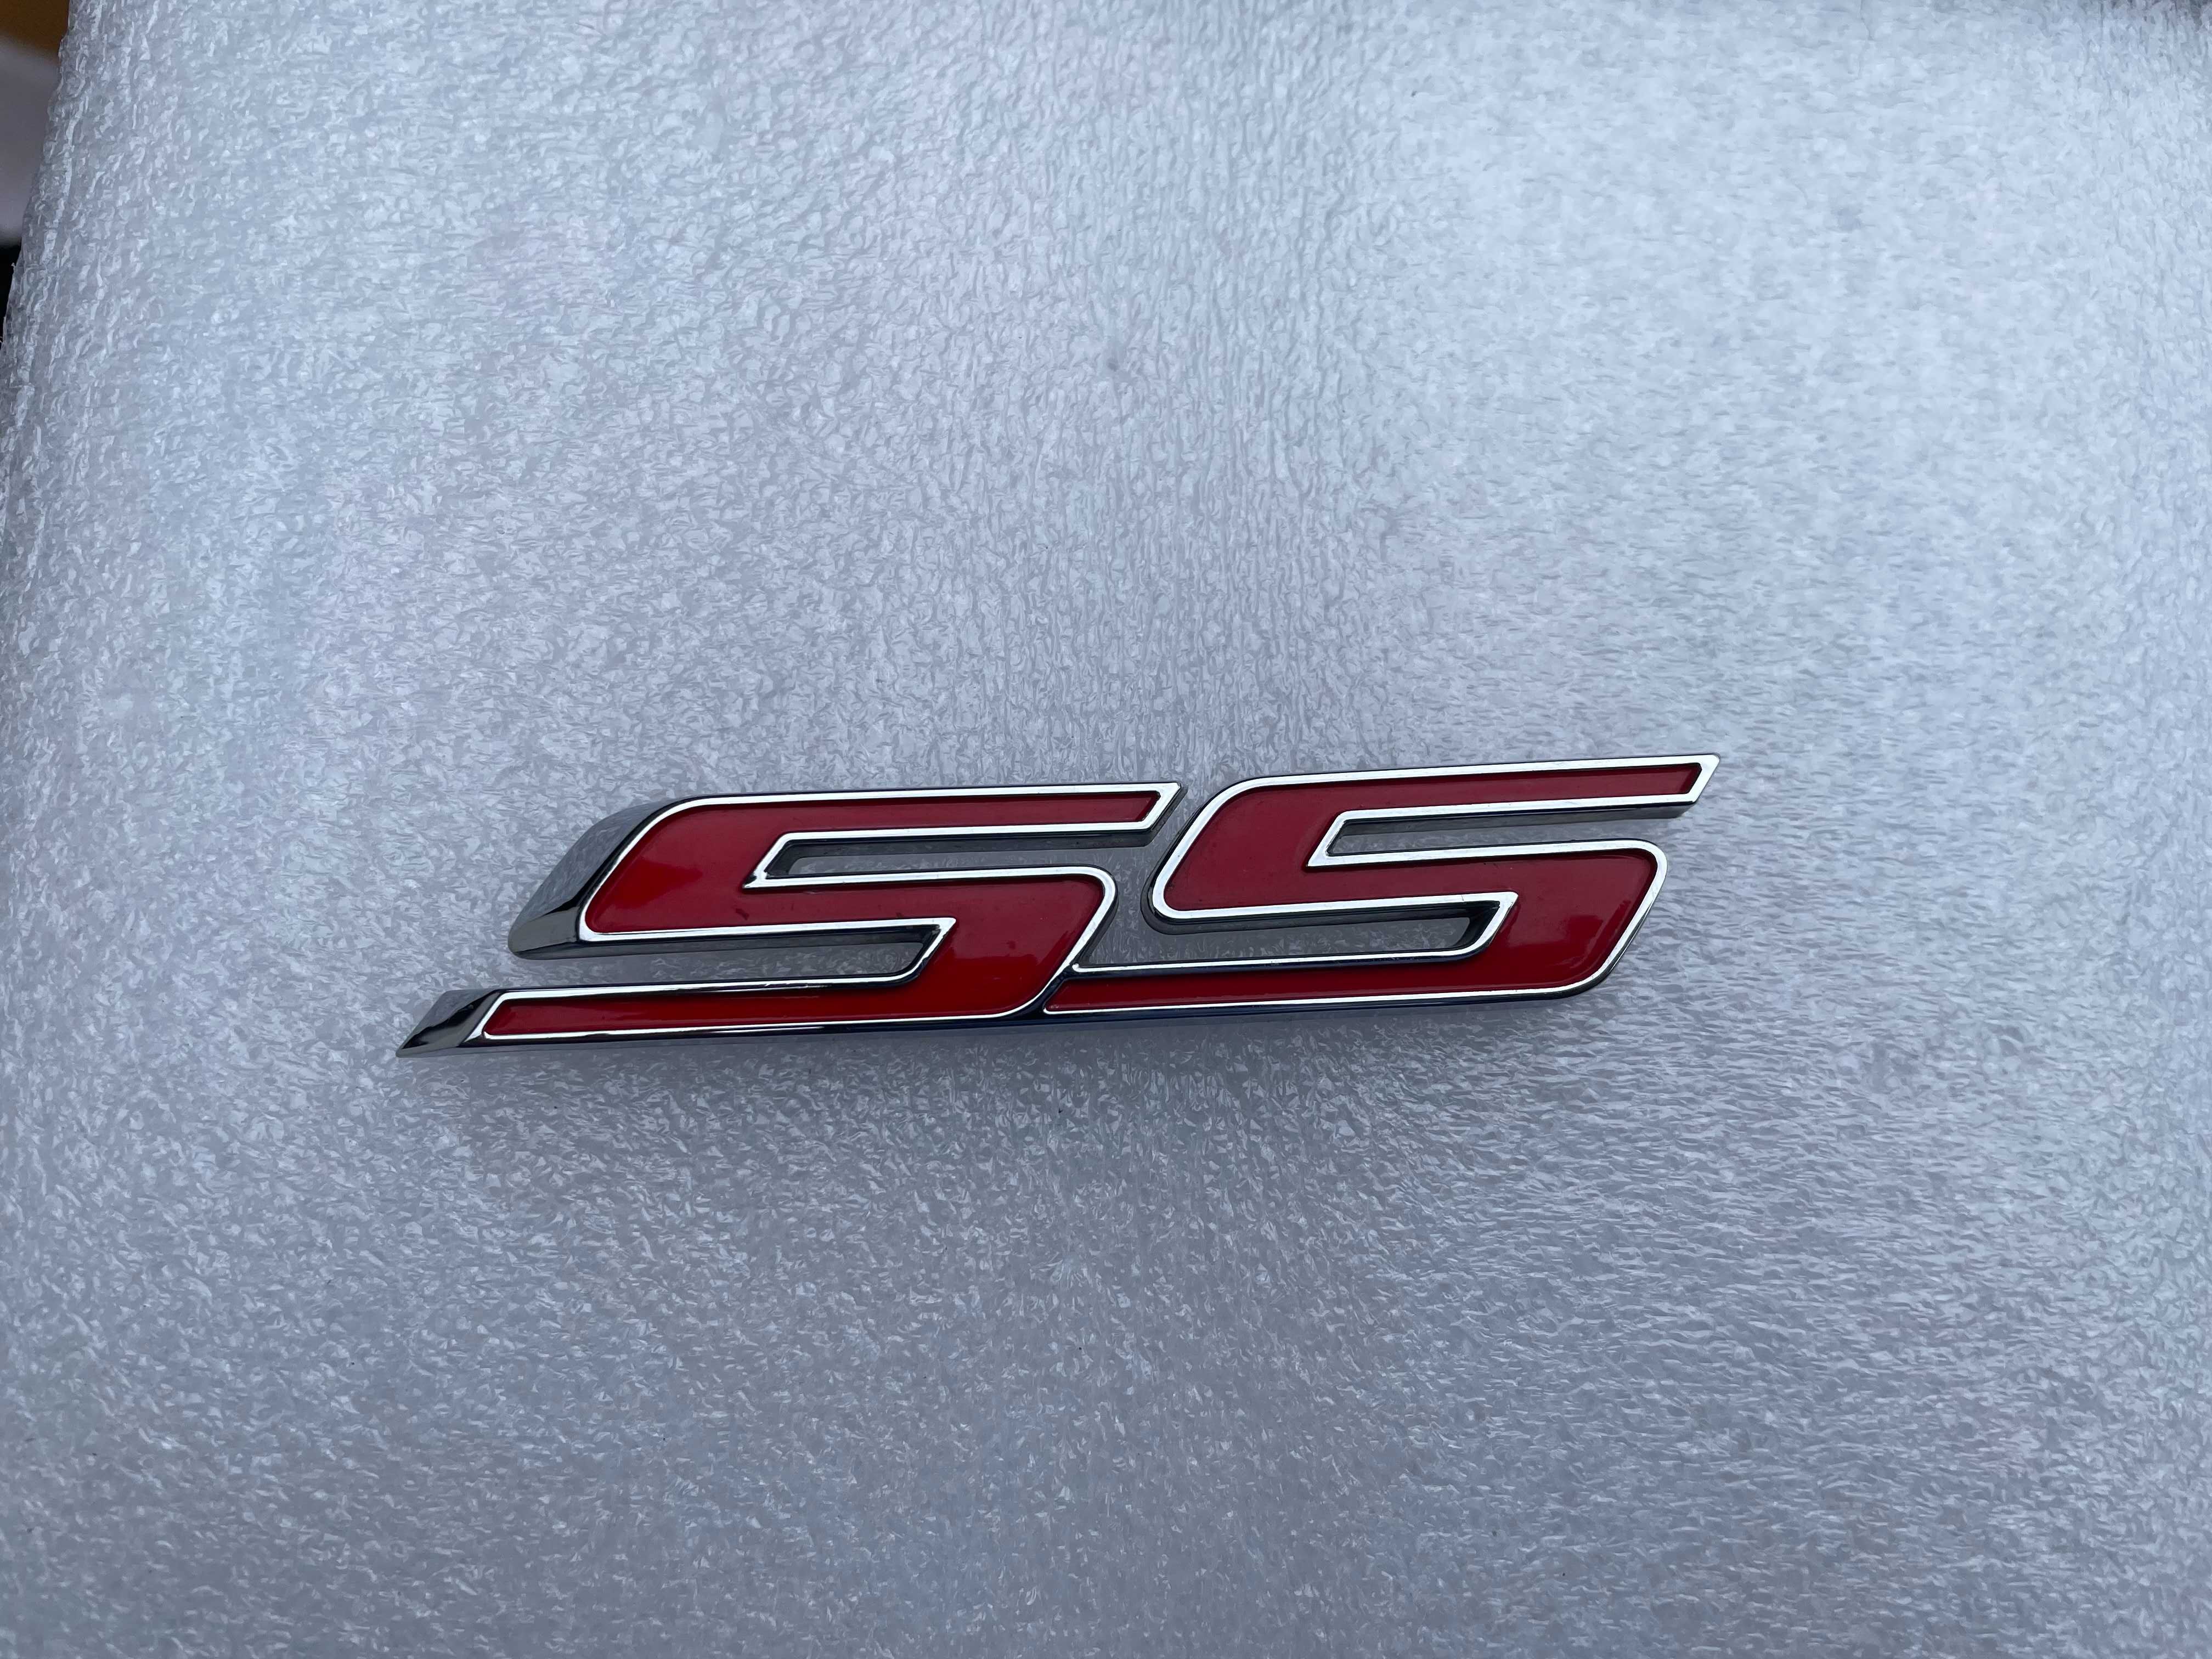 Camaro znaczek SS emblemat napis oryginał 2016+